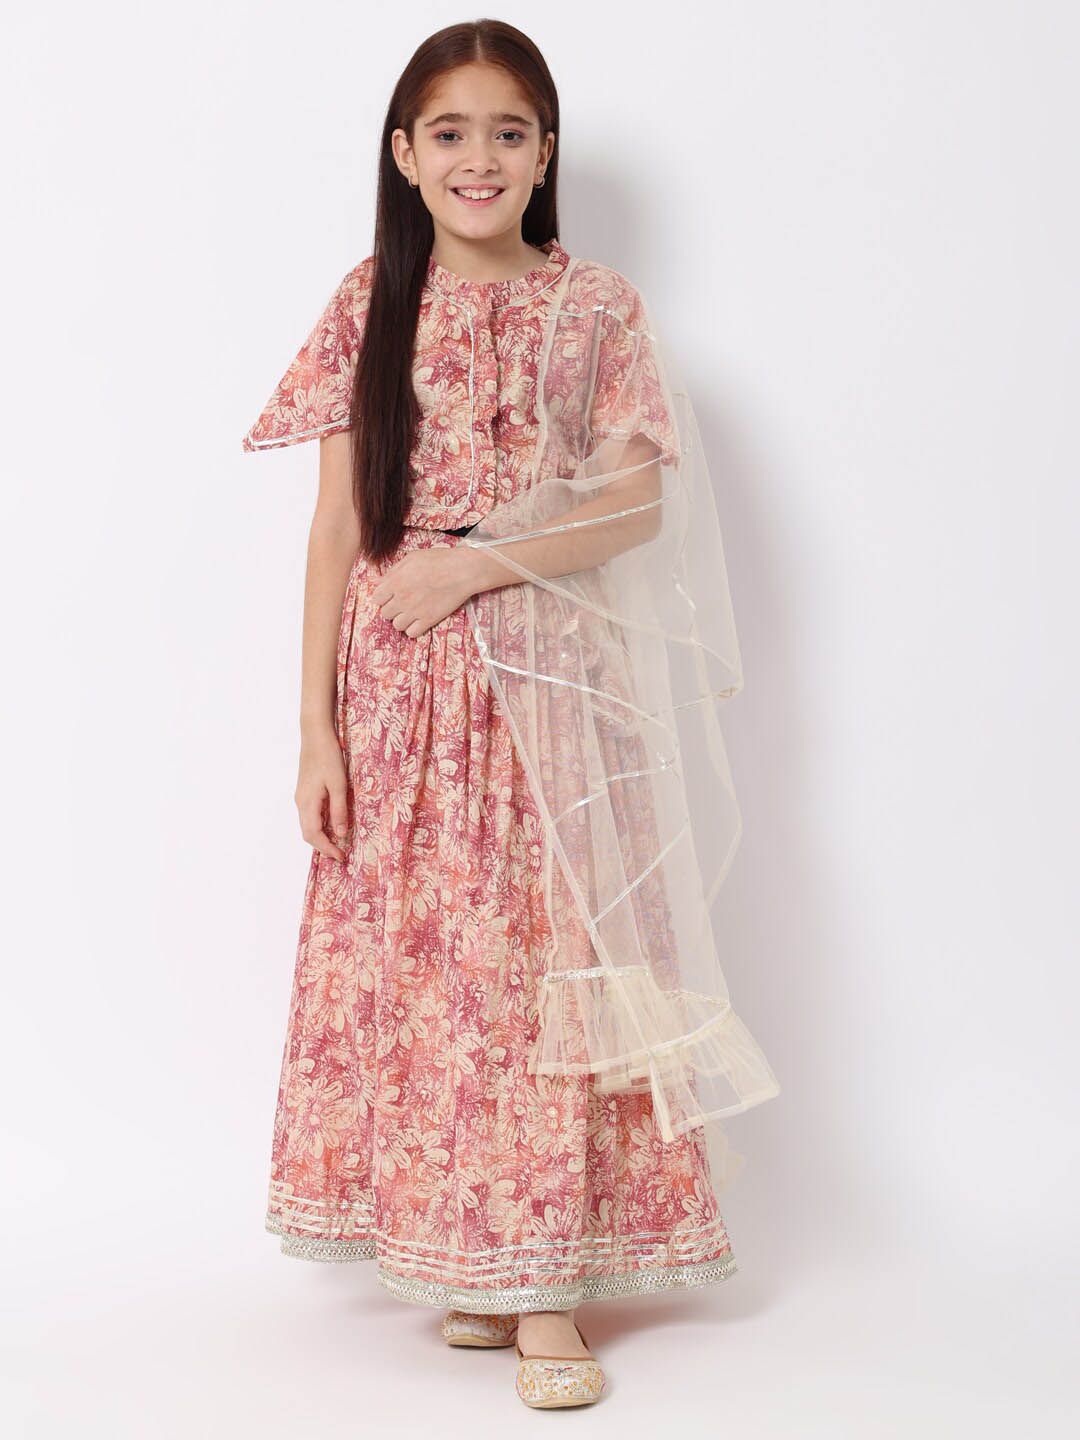 Readiprint Fashions Girls Mauve & Cream-Coloured Printed Ready to Wear Lehenga & Blouse With Dupatta Price in India